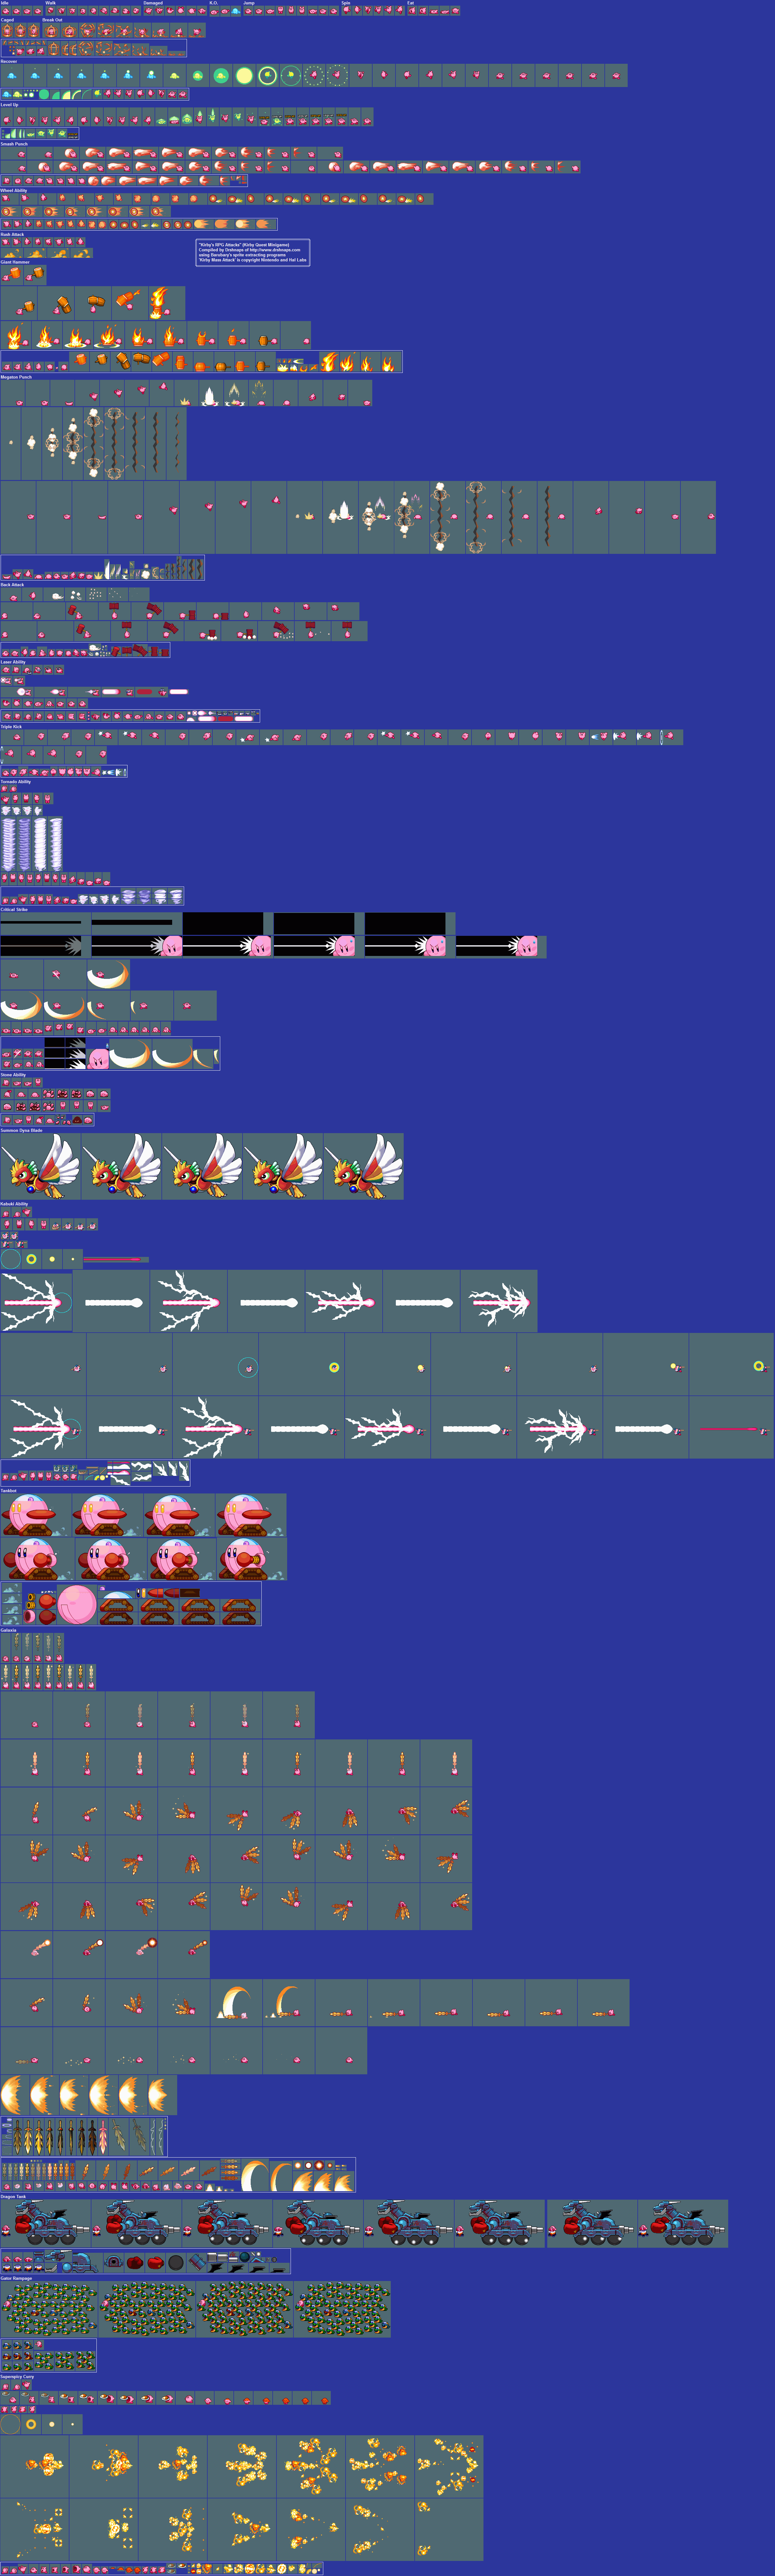 Kirby Mass Attack - Kirby's Attacks